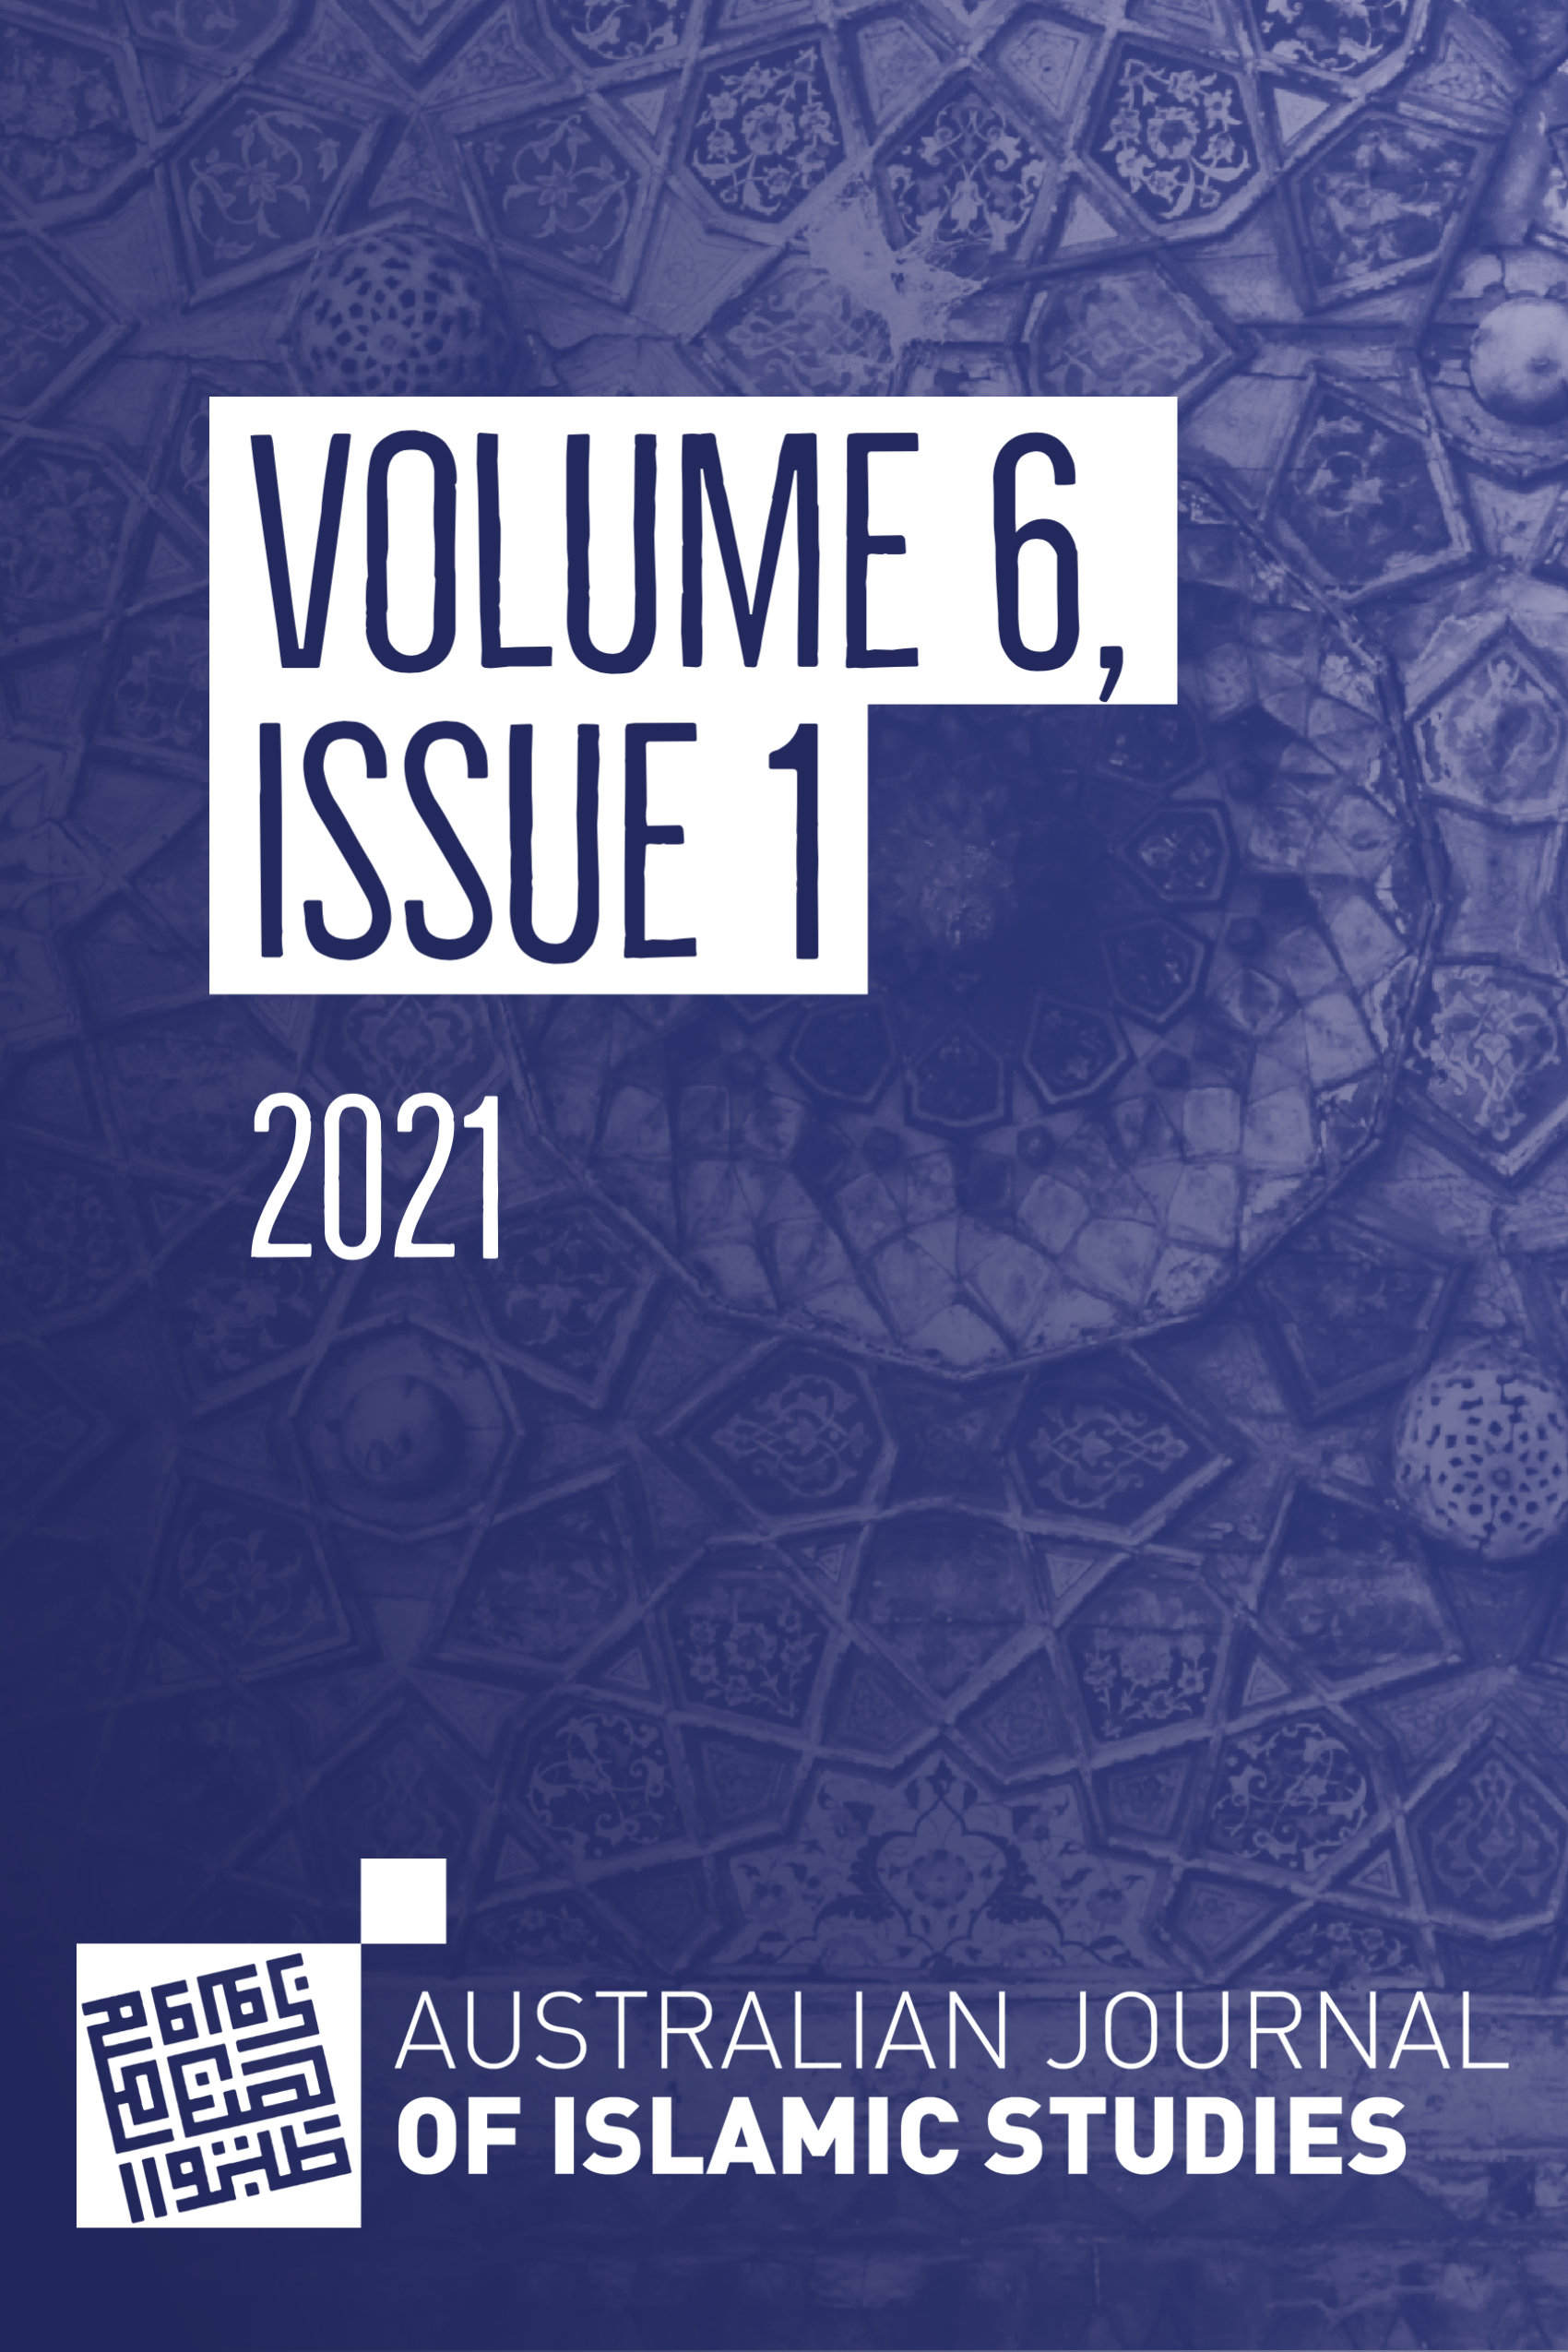 Australian Journal of Islamic Studies